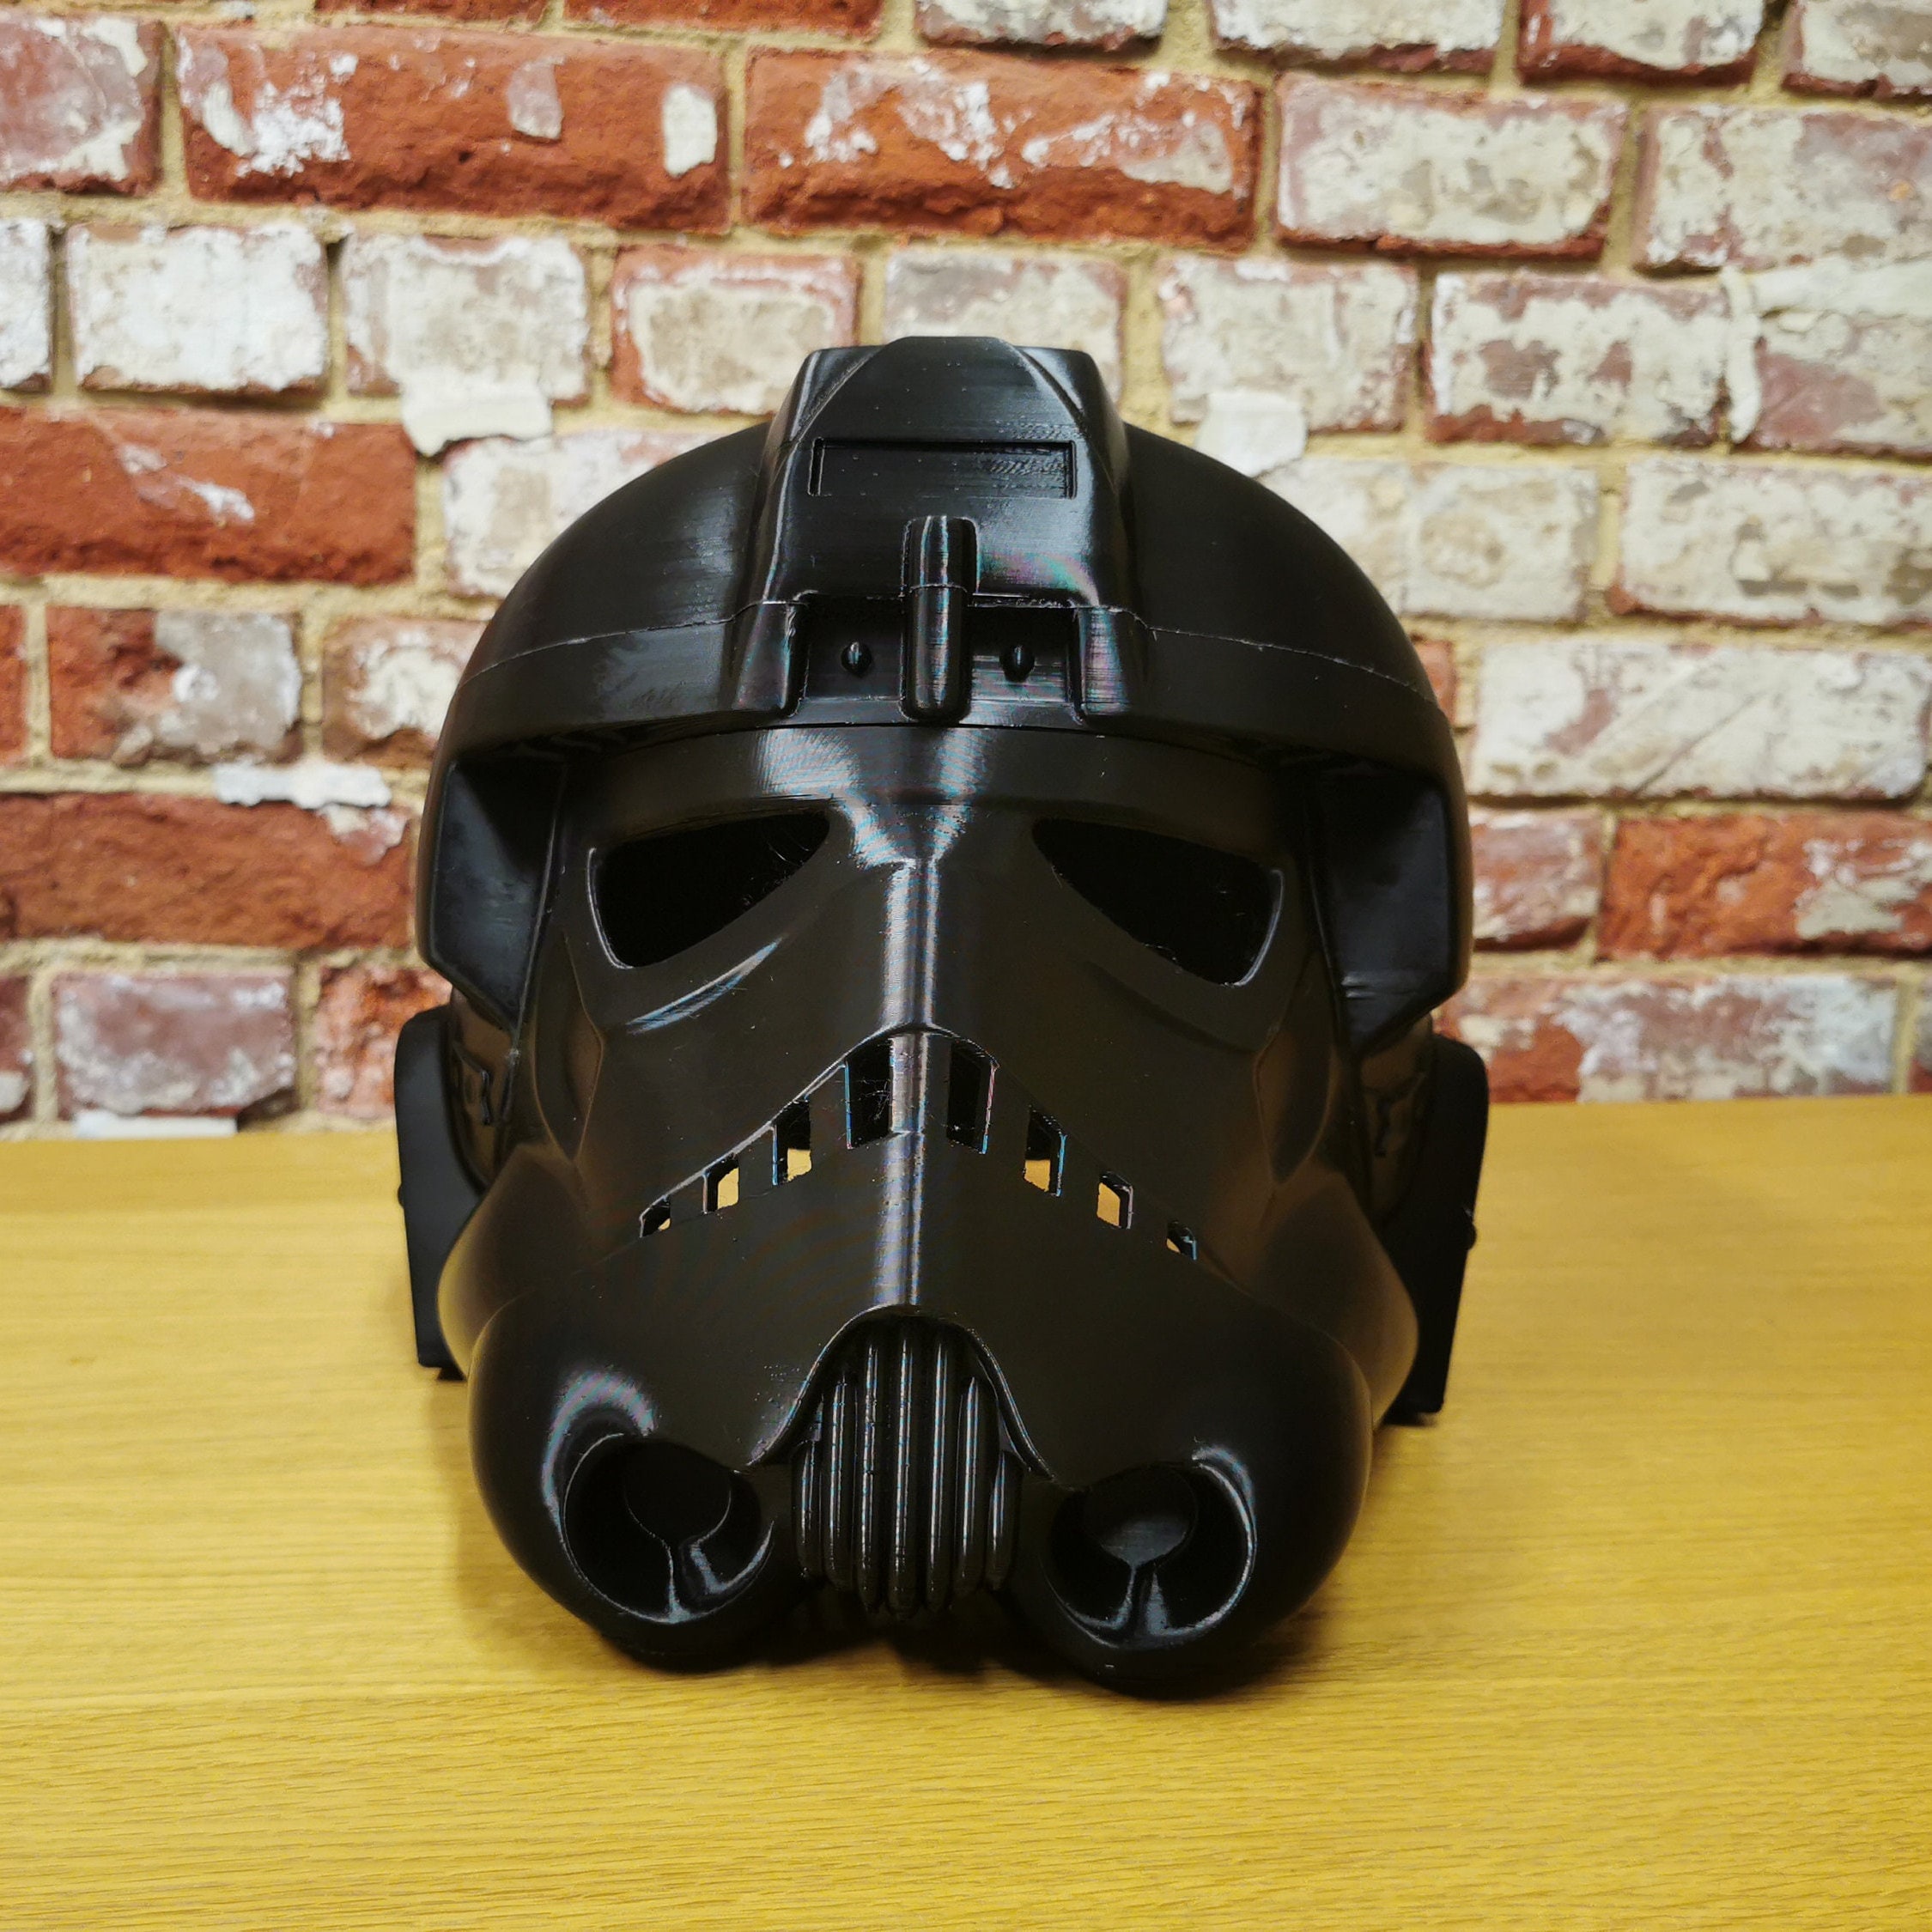 Star Wars Inferno Squad Tie Fighter Helmet Replicas Adult Cosplay